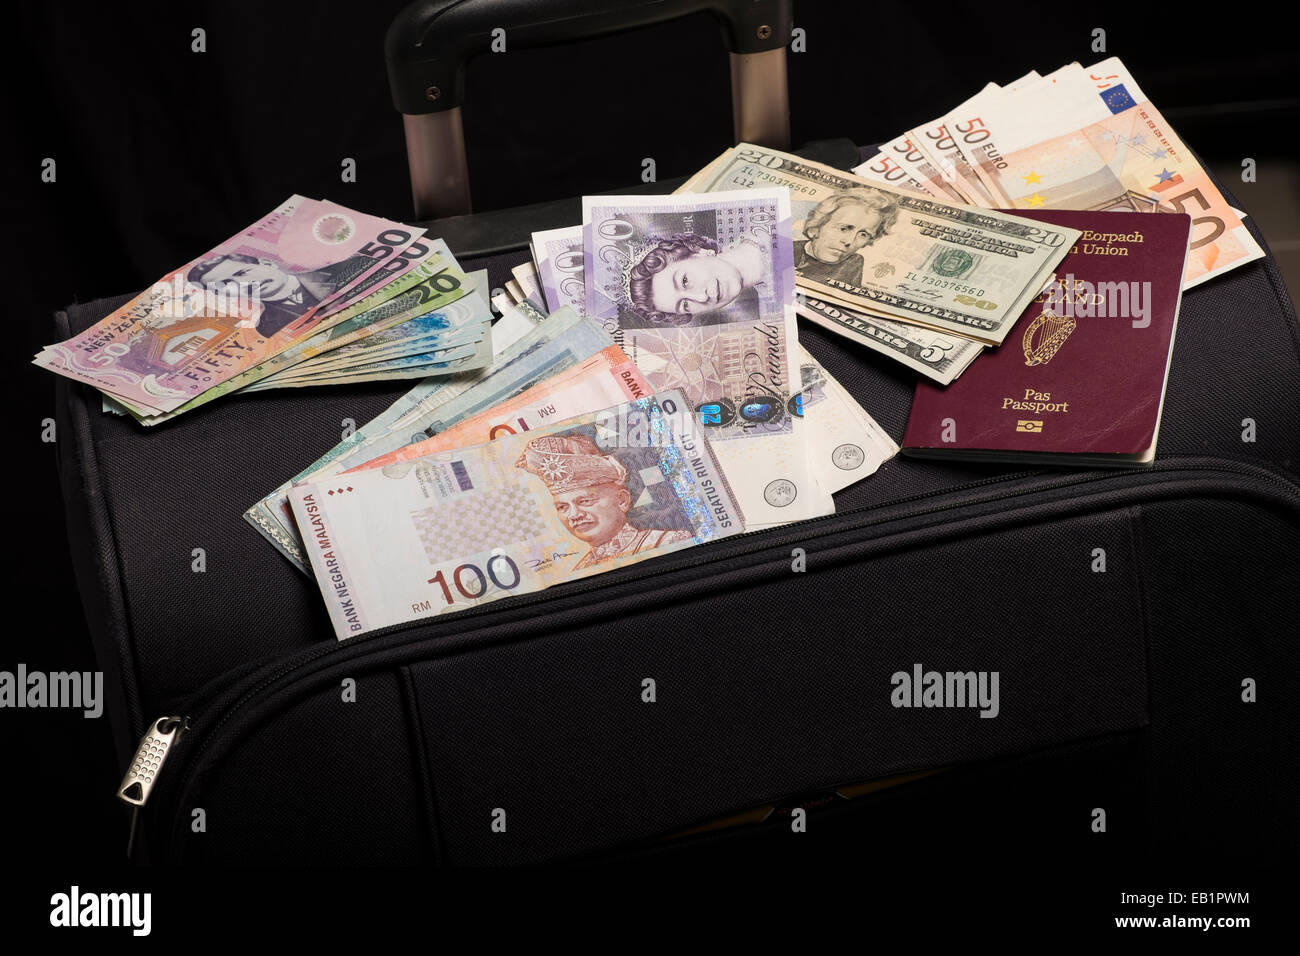 Moneta note, dollaro US, dollaro neozelandese, Ringitts Malesi, sterline inglesi, euro e passaporto irlandese su una valigia Foto Stock